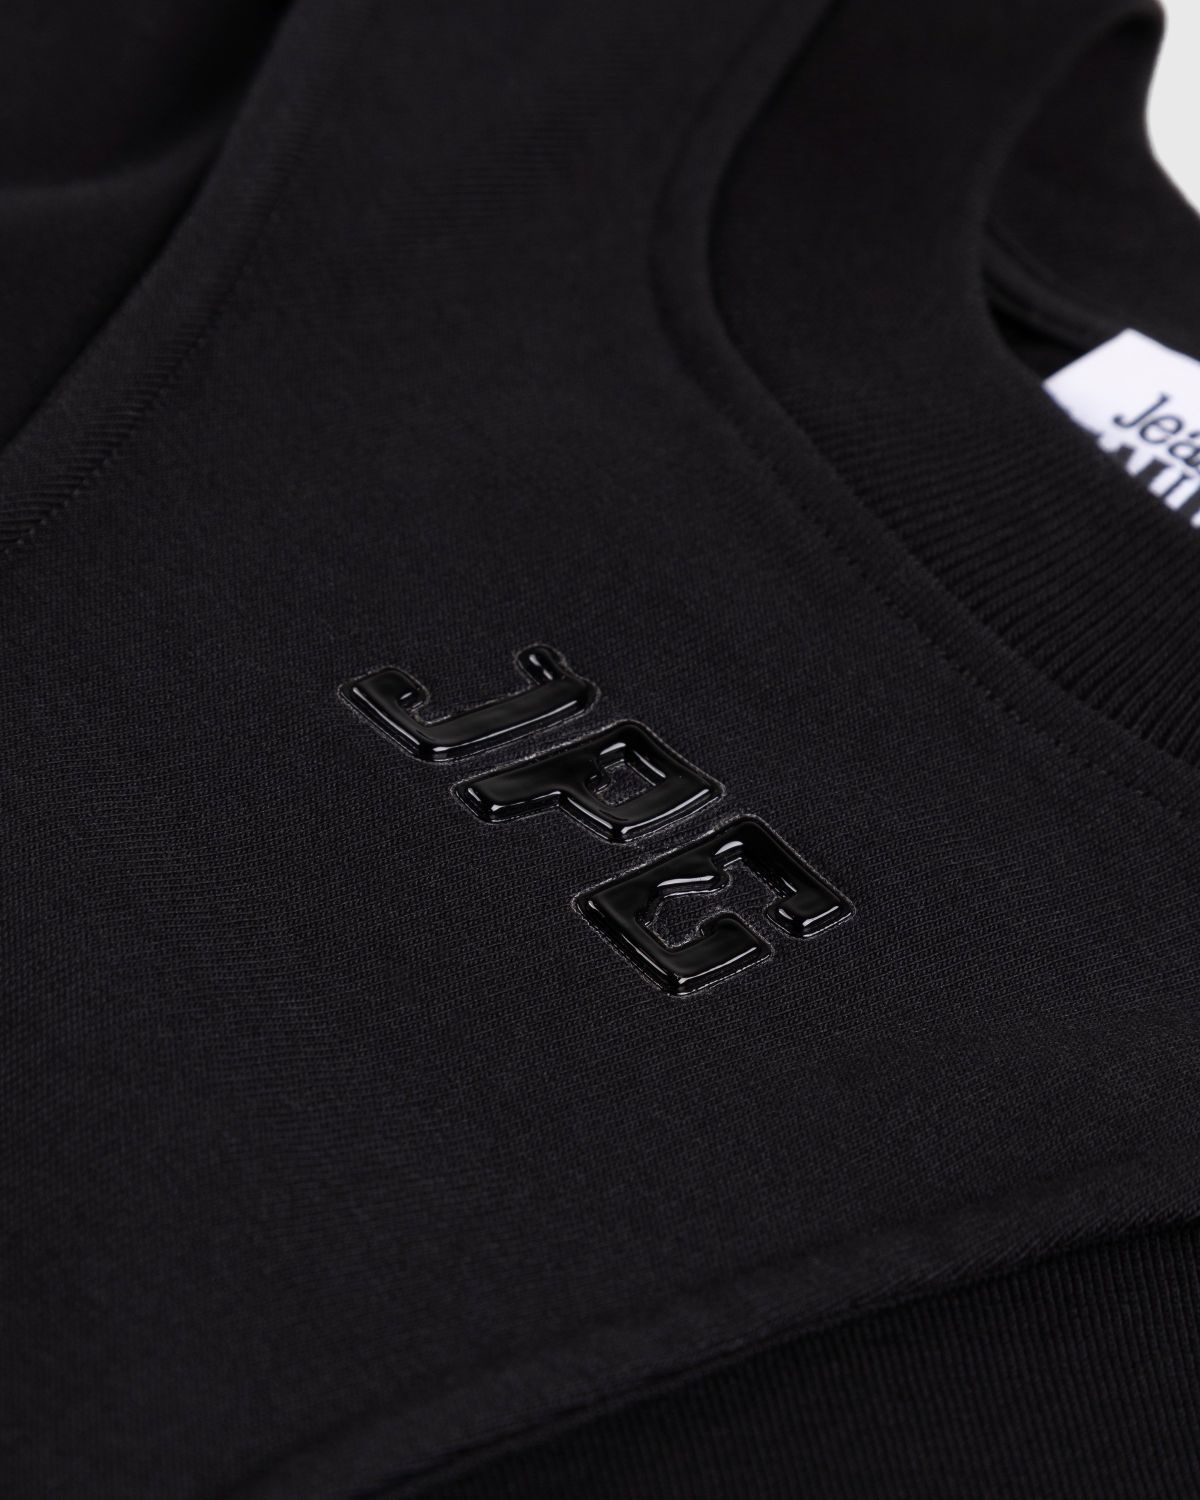 Jean Paul Gaultier – JPG T-Shirt Black - 5